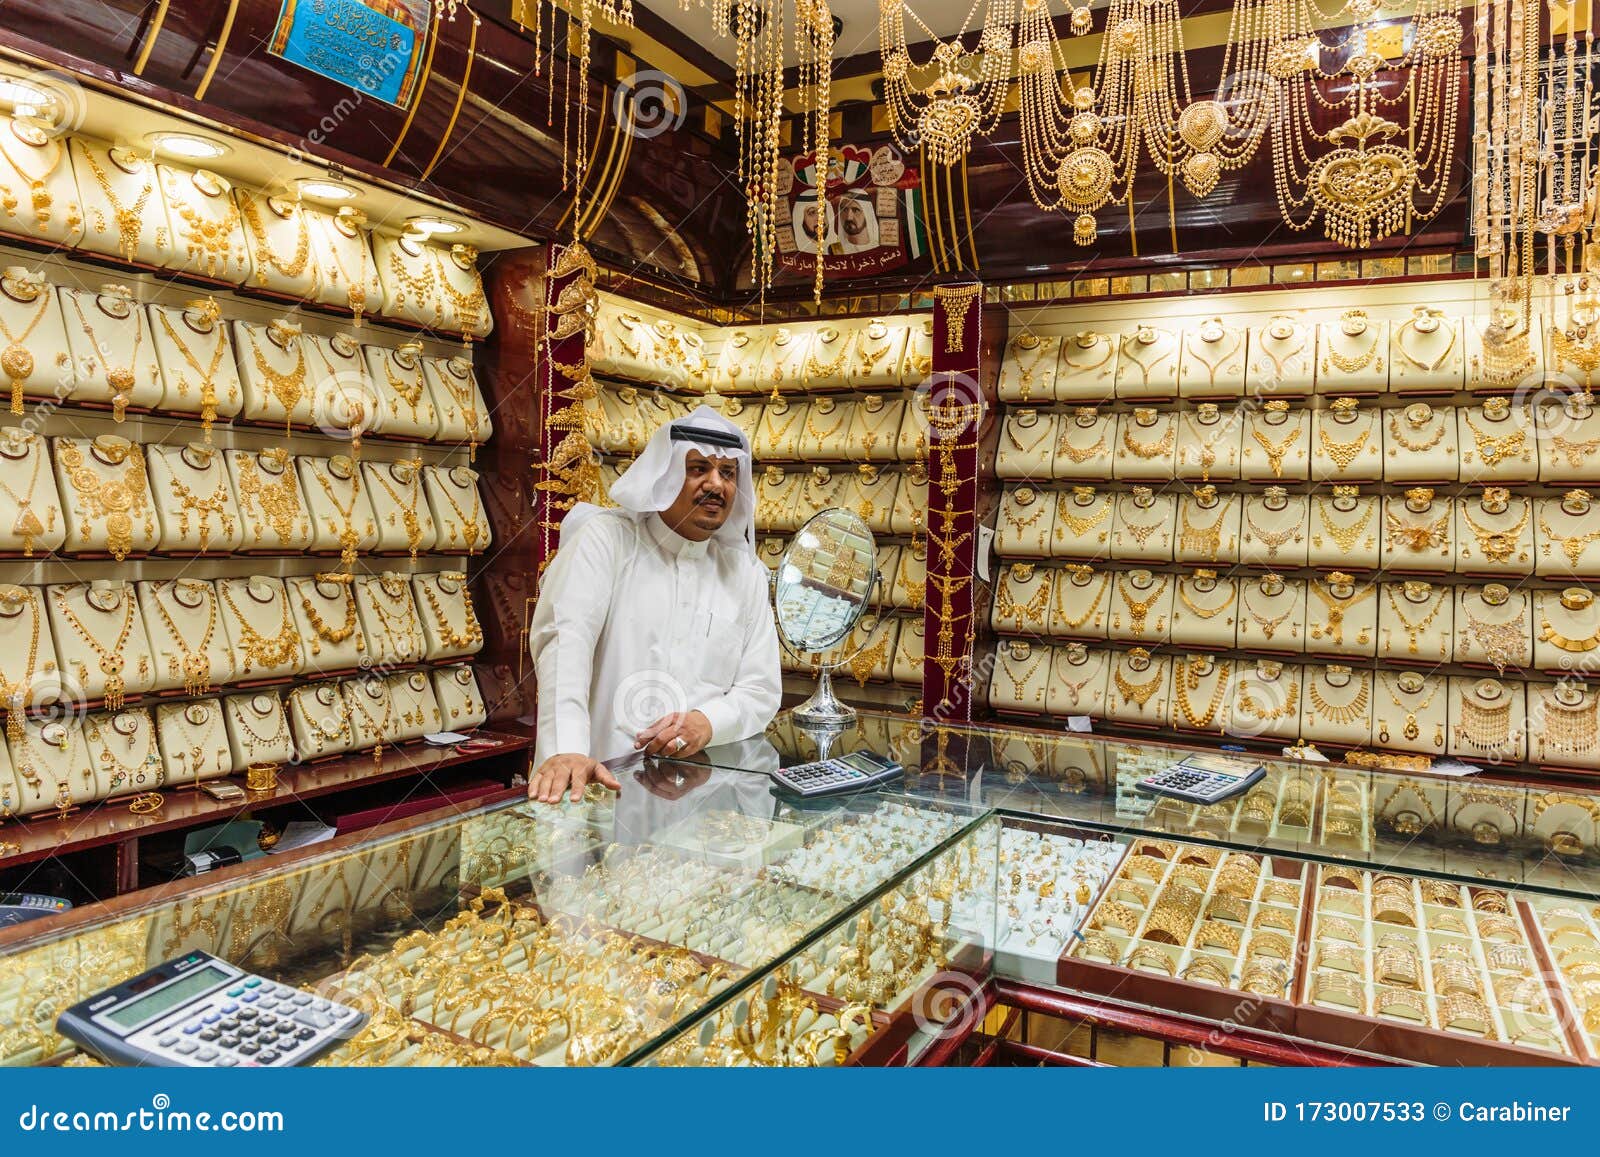 Gold market in Dubai, UAE editorial stock photo. Image of display ...